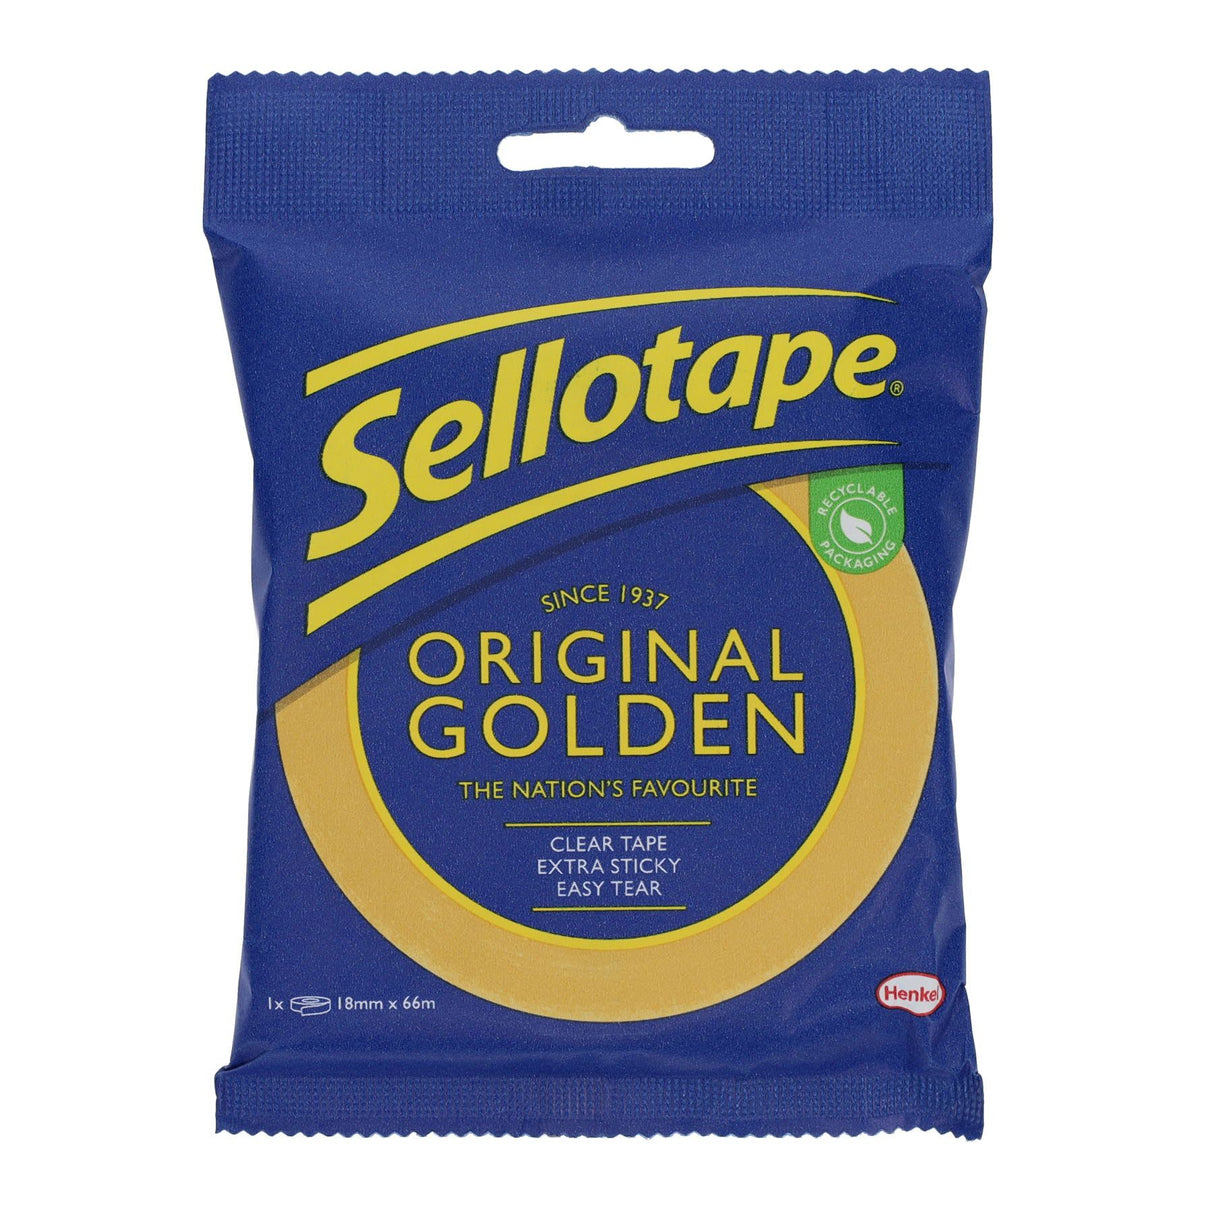 Sellotape Original Golden Tape 18Mmx66m | Stationery Shop UK